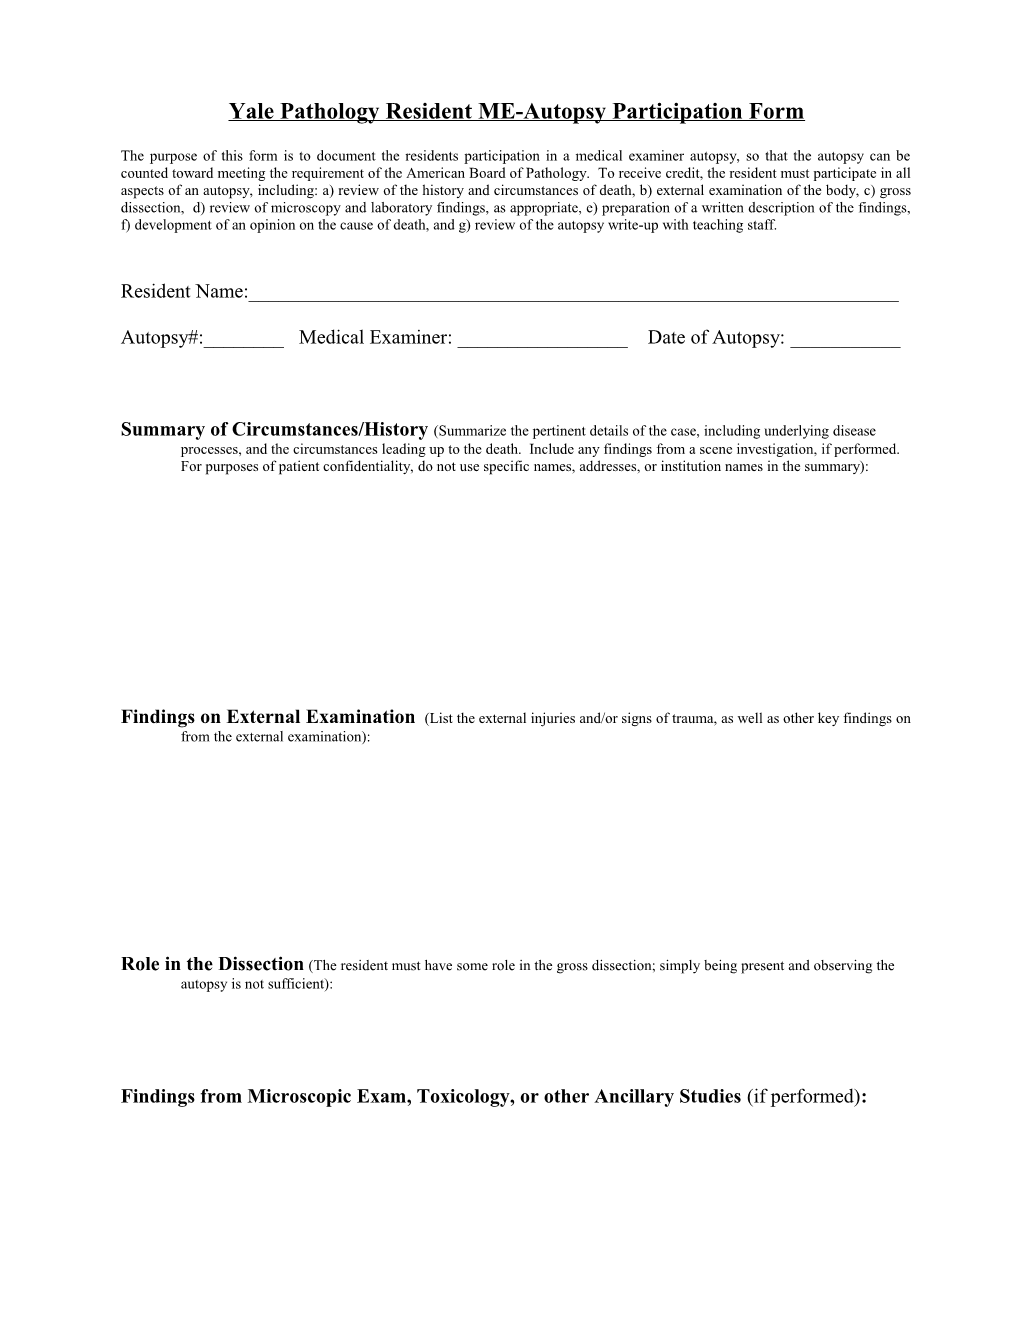 Yale Pathology Resident ME-Autopsy Participation Form